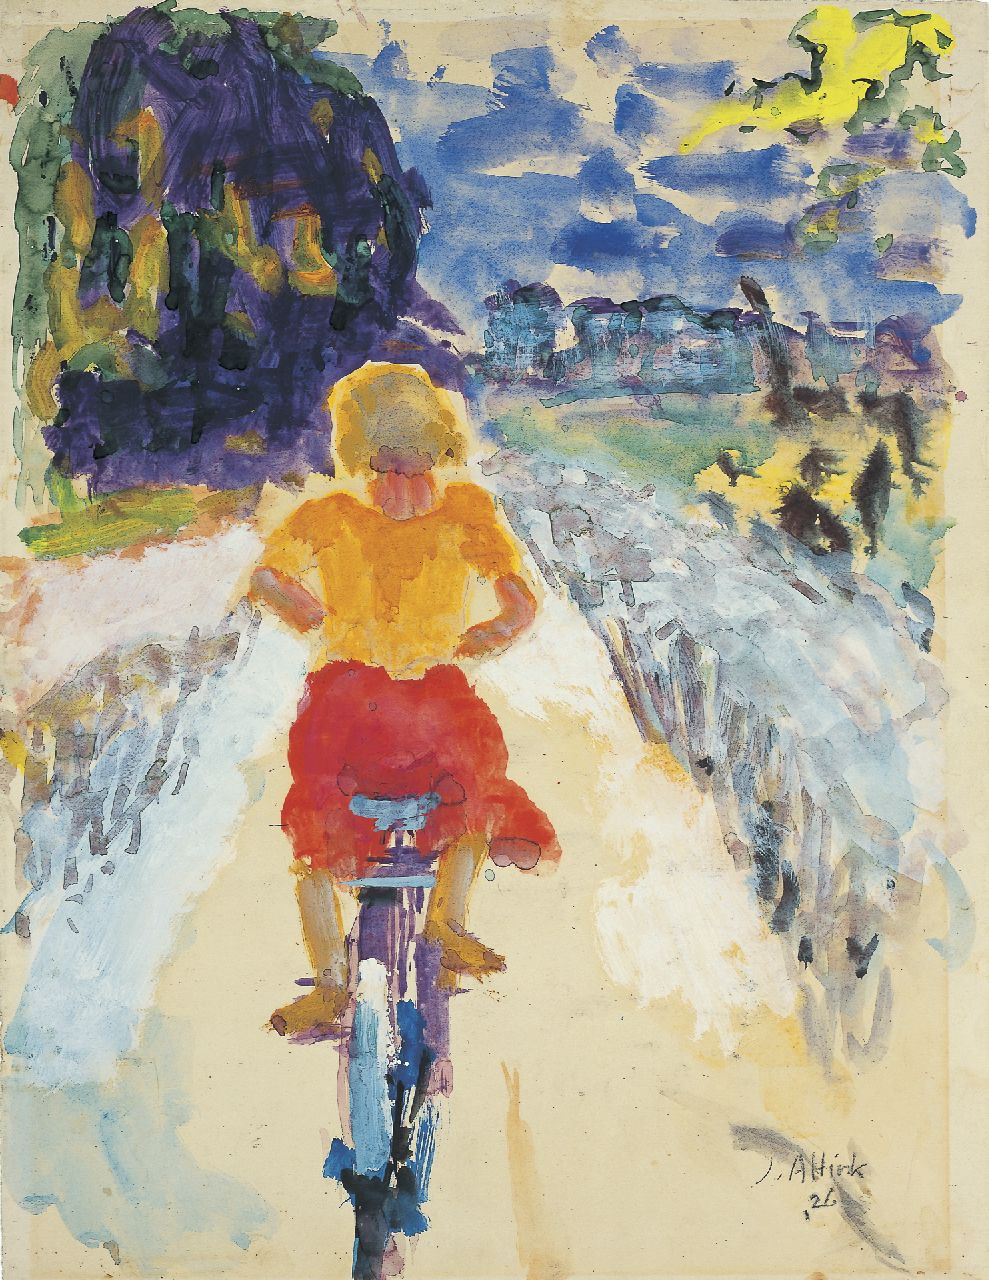 Altink J.  | Jan Altink, Meisje op de fiets, watercolour on paper 63.0 x 47.0 cm, signed l.r. and dated '26